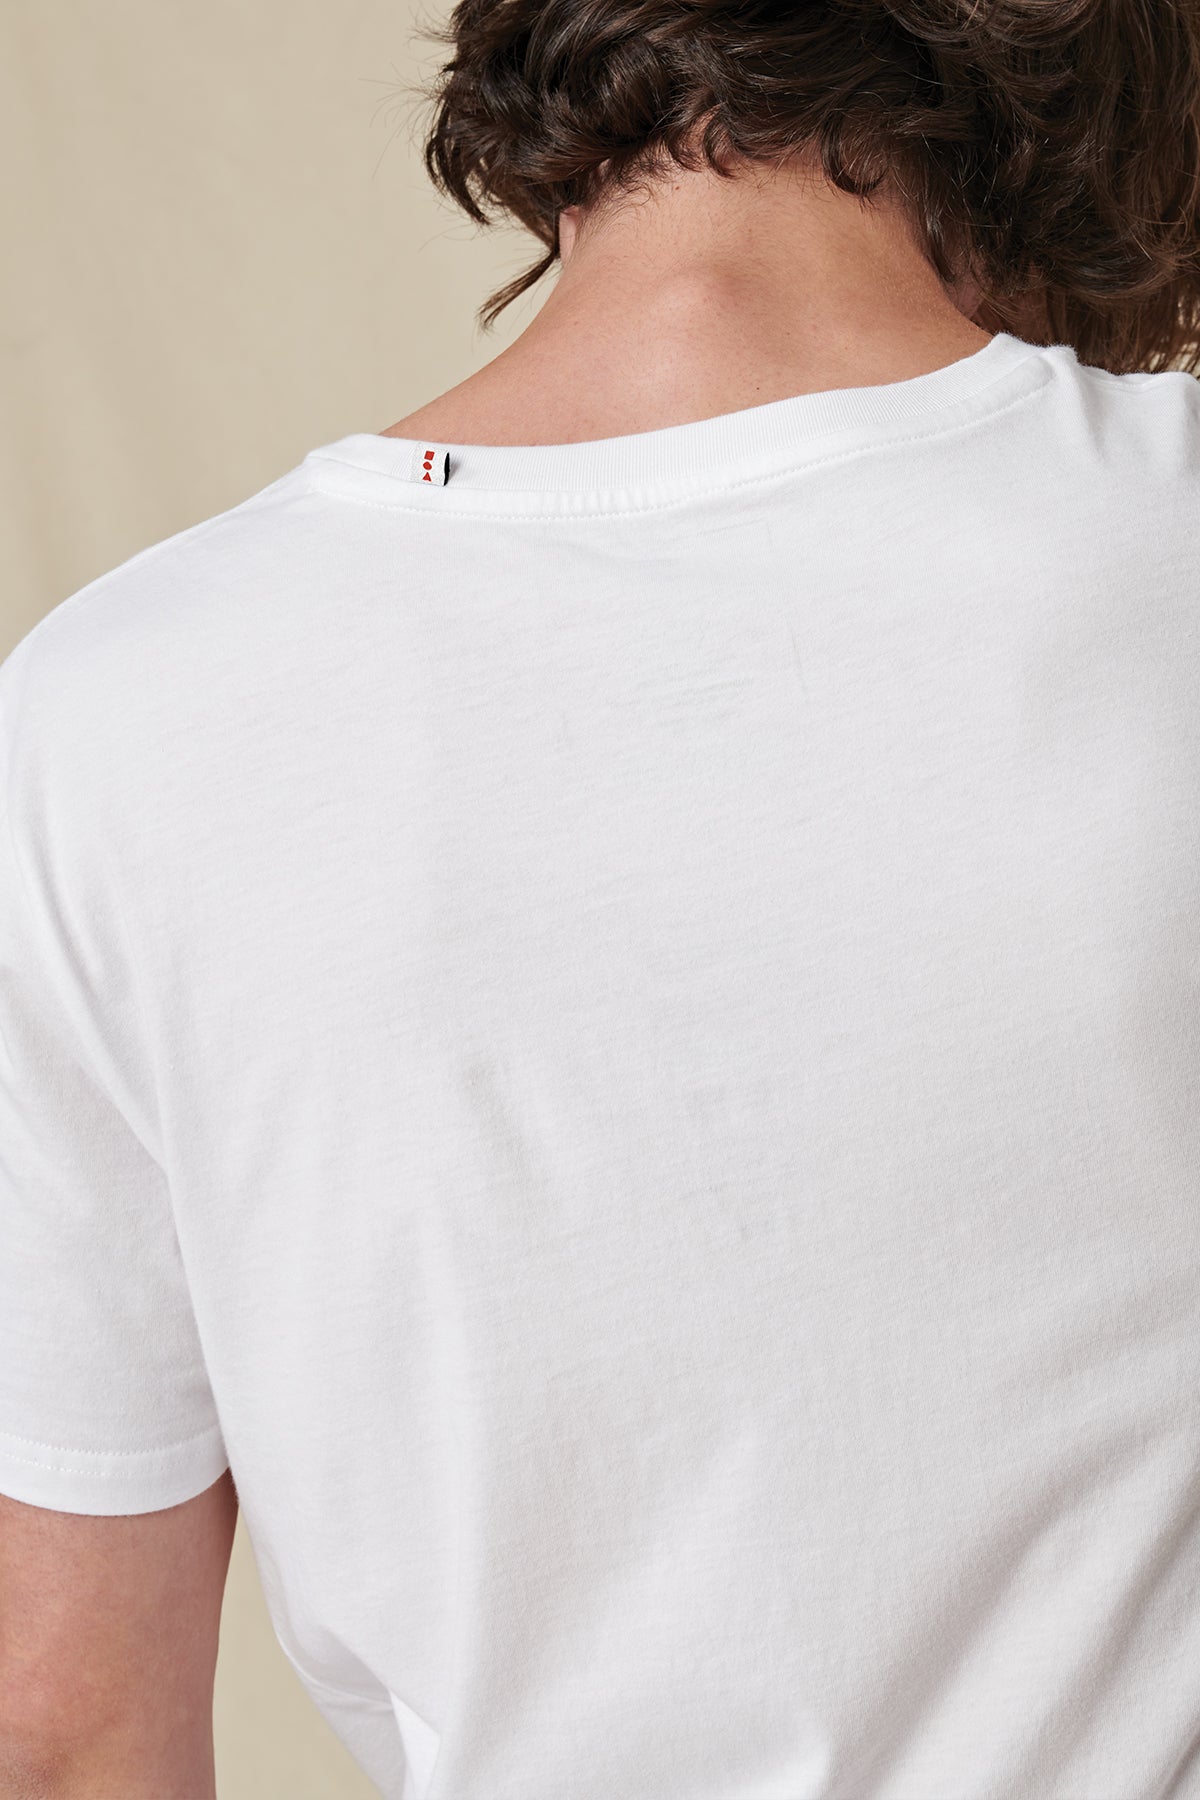 back collar view of White Globe Brand tee